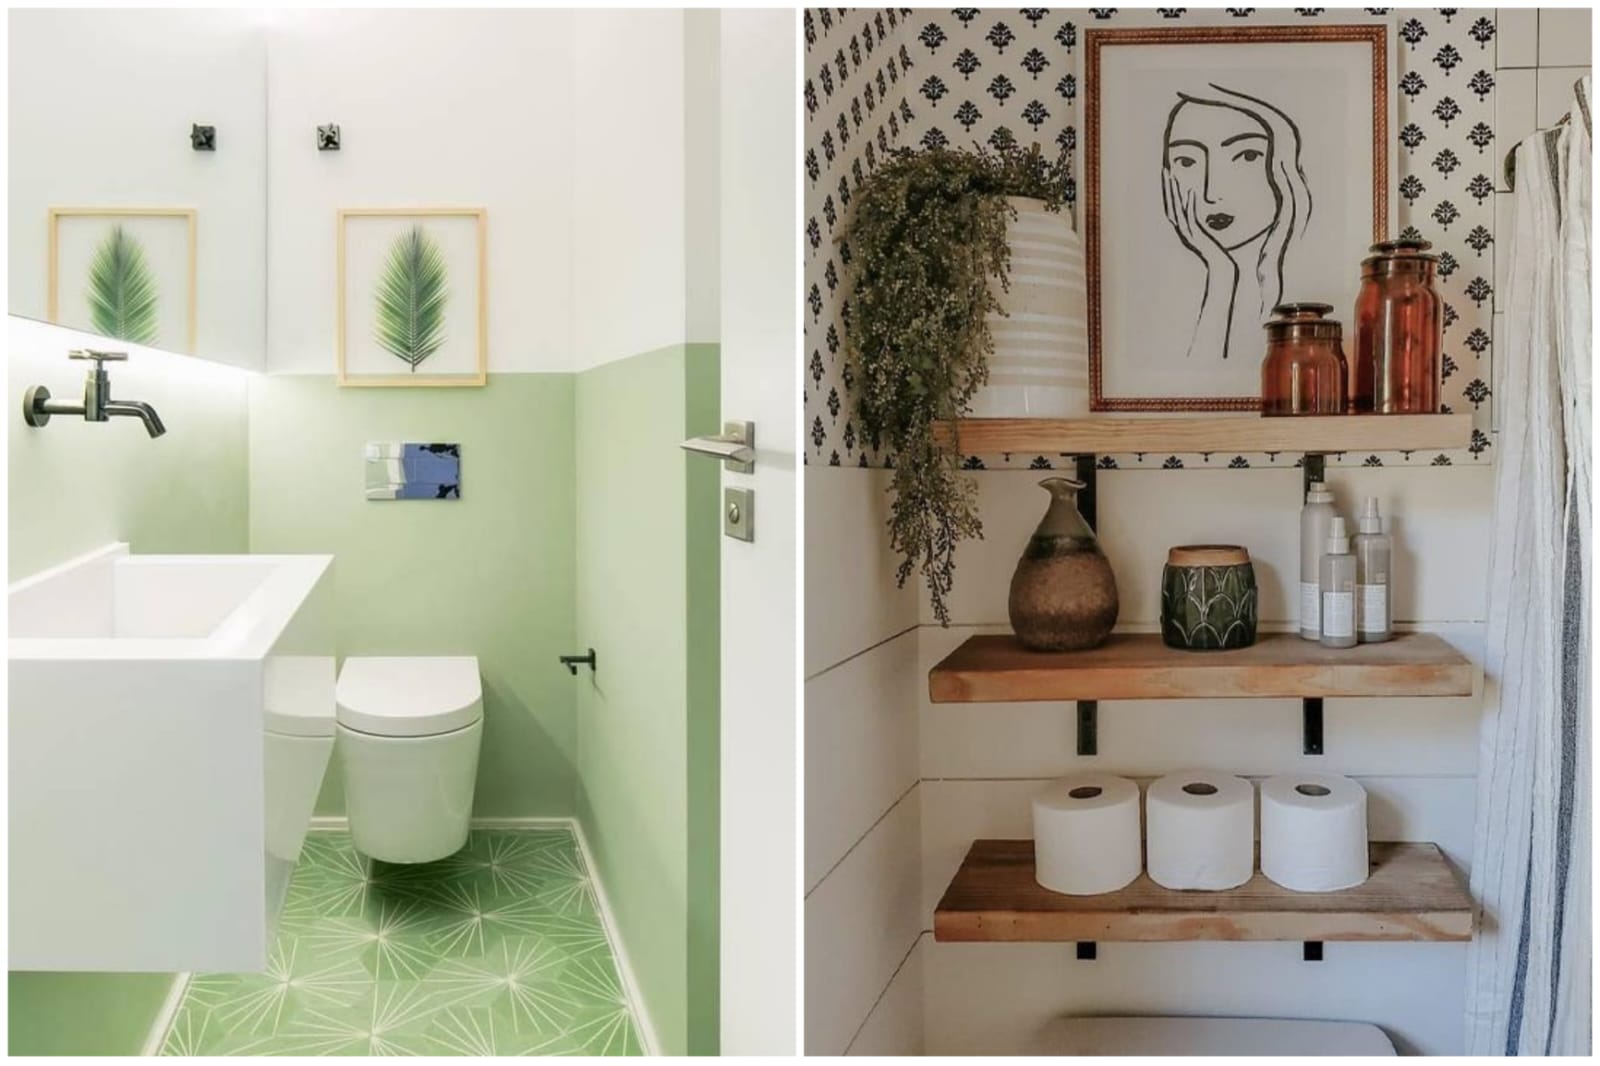 Banheiro: confira 4 dicas para deixar cômodo, mesmo pequeno, mais moderno